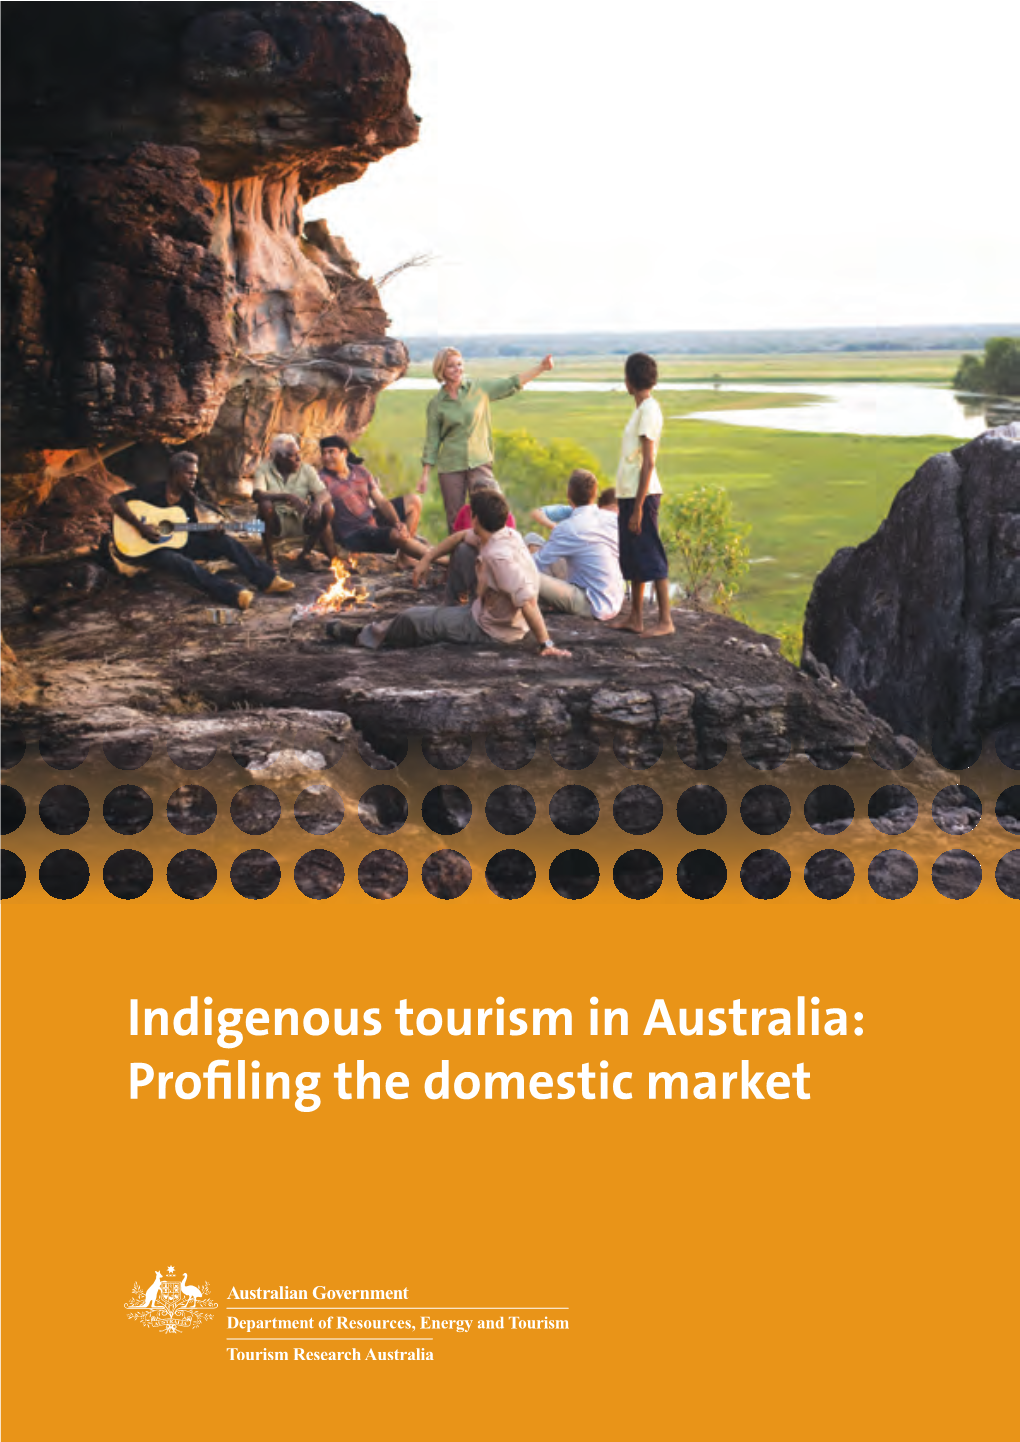 Indigenous Tourism in Australia: Profiling the Domestic Market, Tourism Research Australia, Canberra